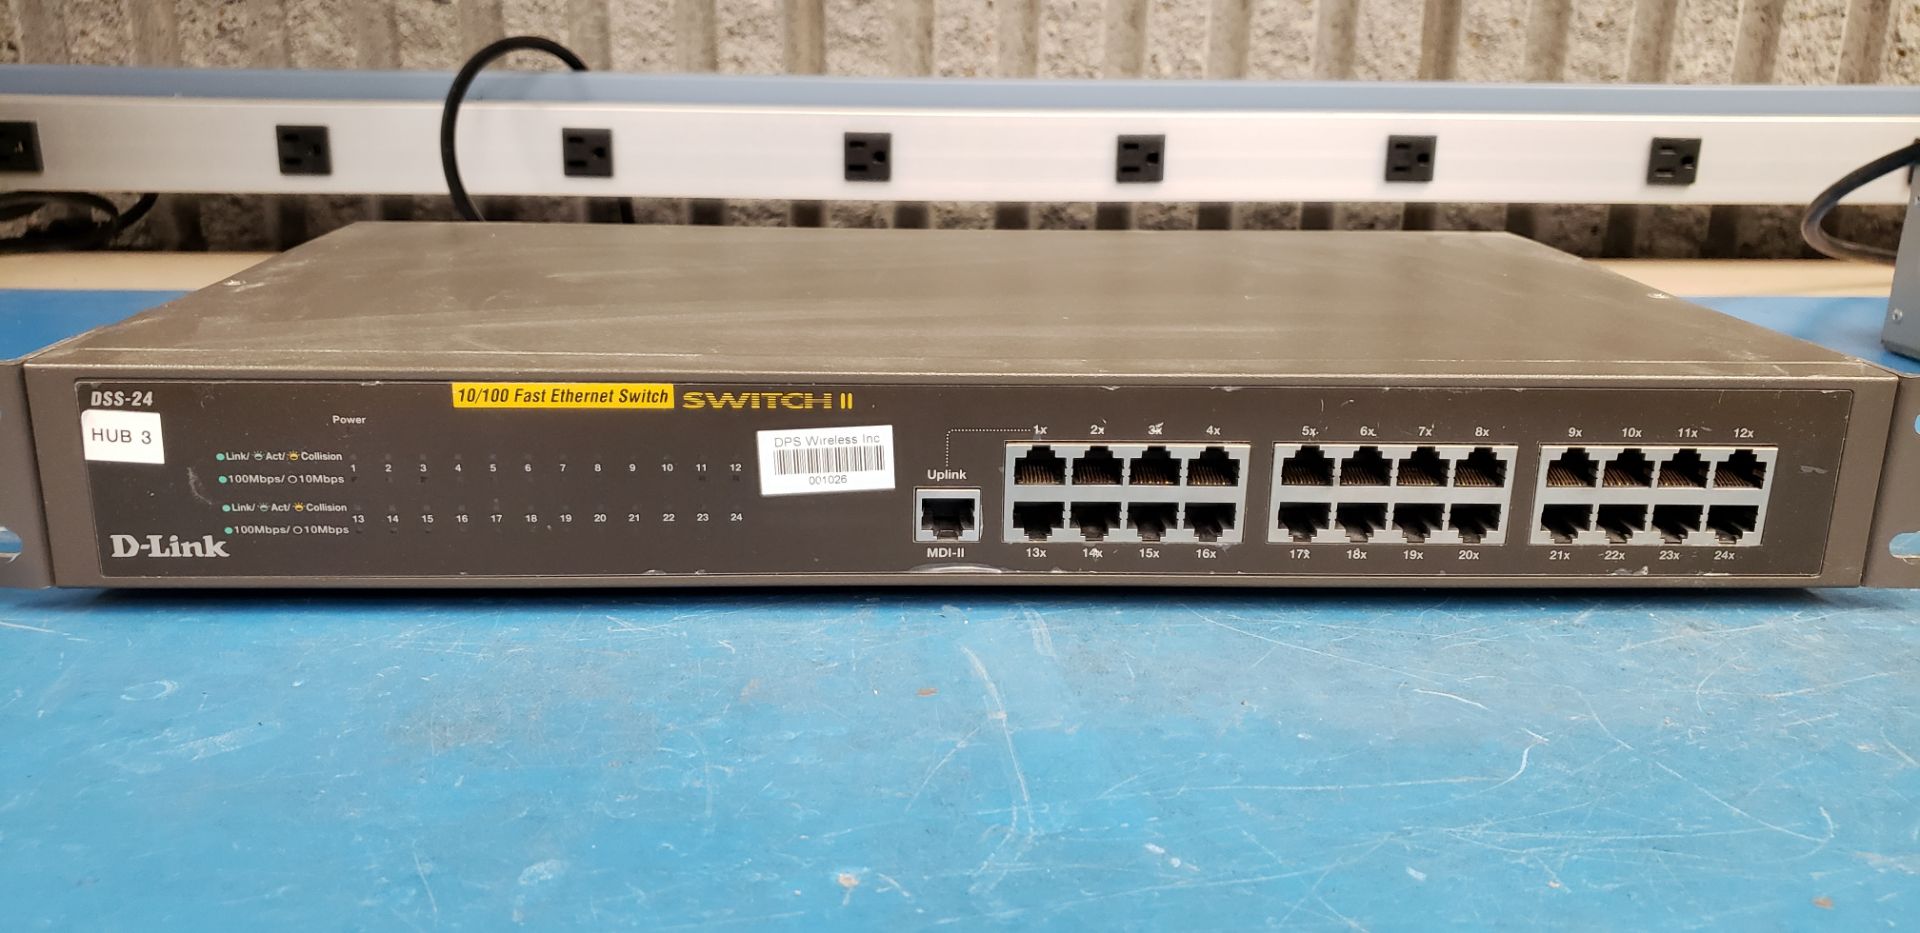 D-Link "DSS-24" 10/100 Fast Ethernet Switch II